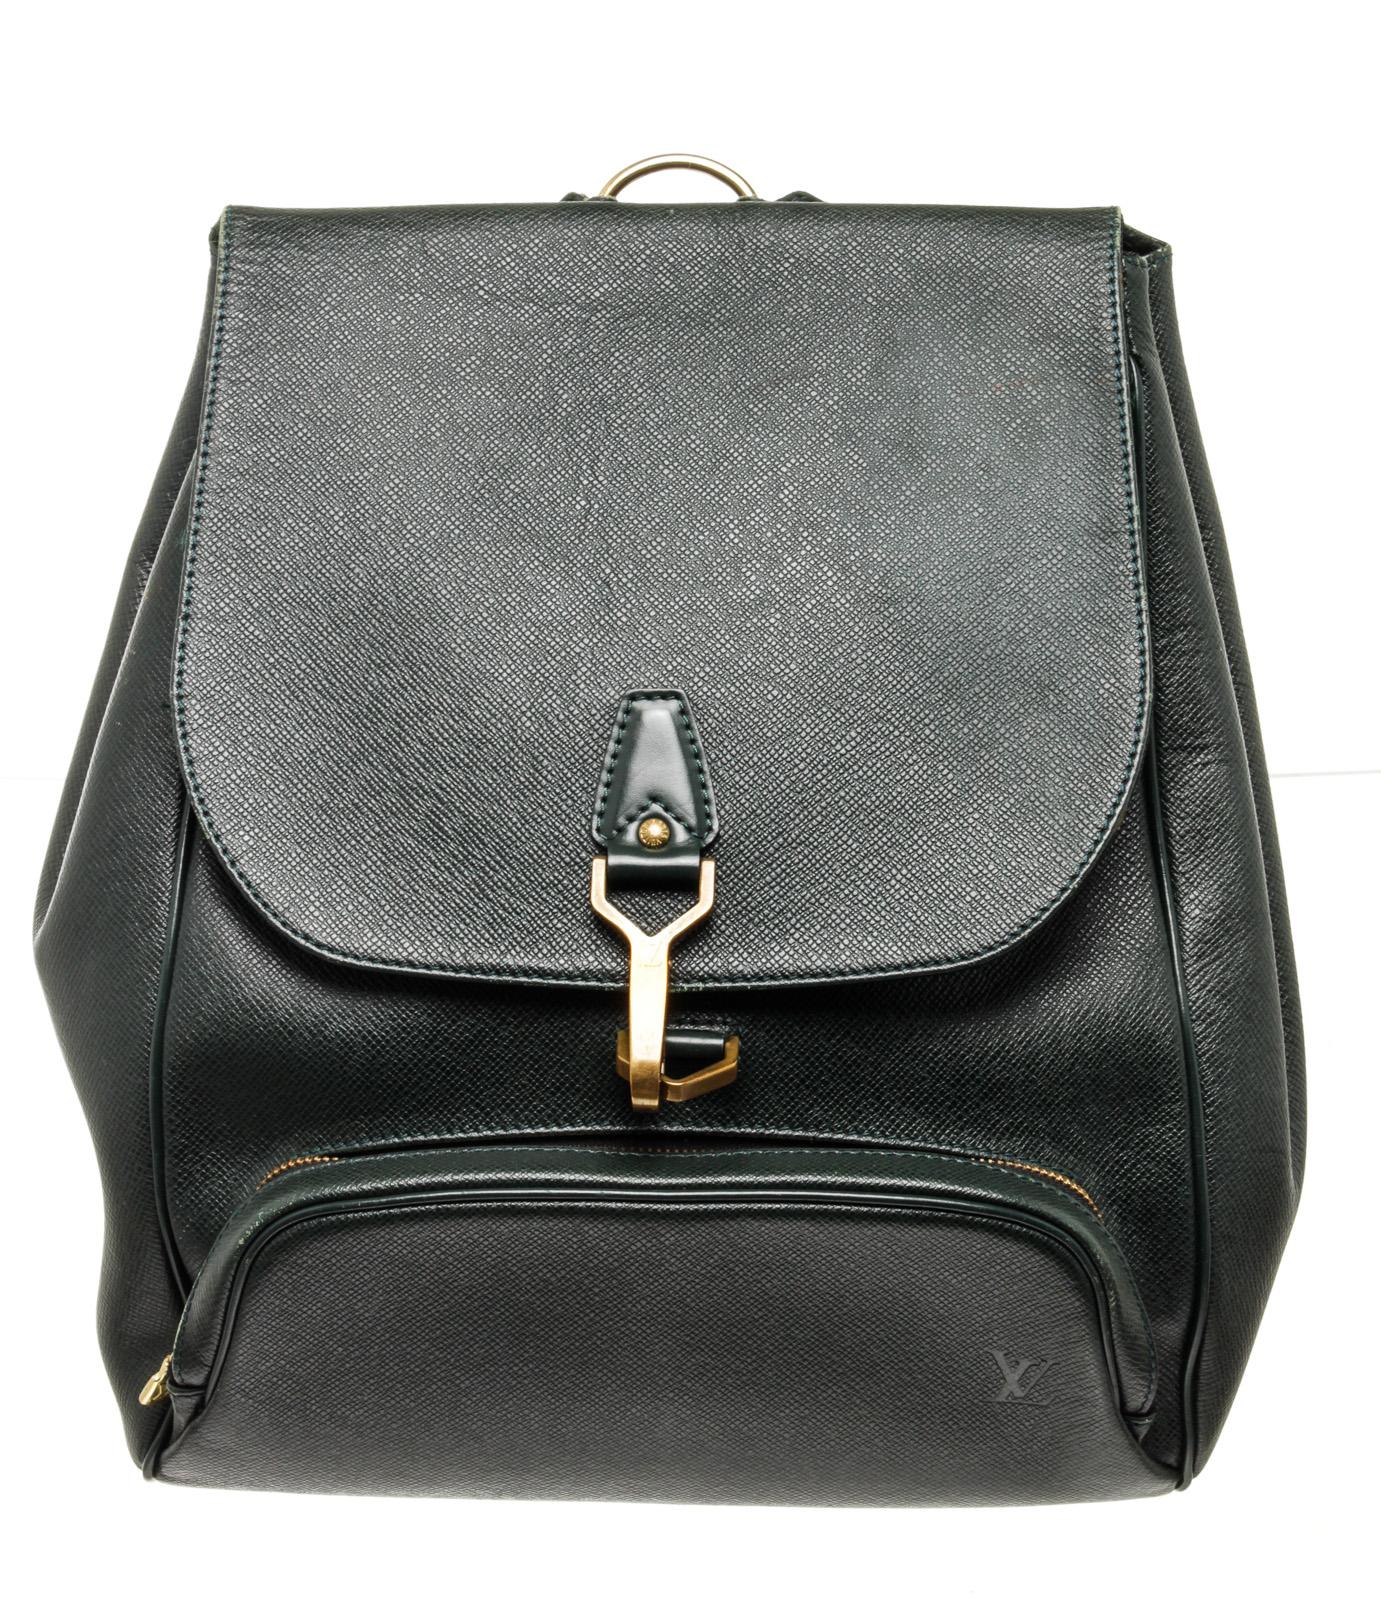 Louis Vuitton Black Leather Cassia Briefcase Bag with leather, gold-toneÂ hardware, trim tan vachetta leather,Â exteriorÂ zip pocket, interior zip pocket,Â shoulder strapÂ andÂ snapÂ closure.

48716MSCÂ